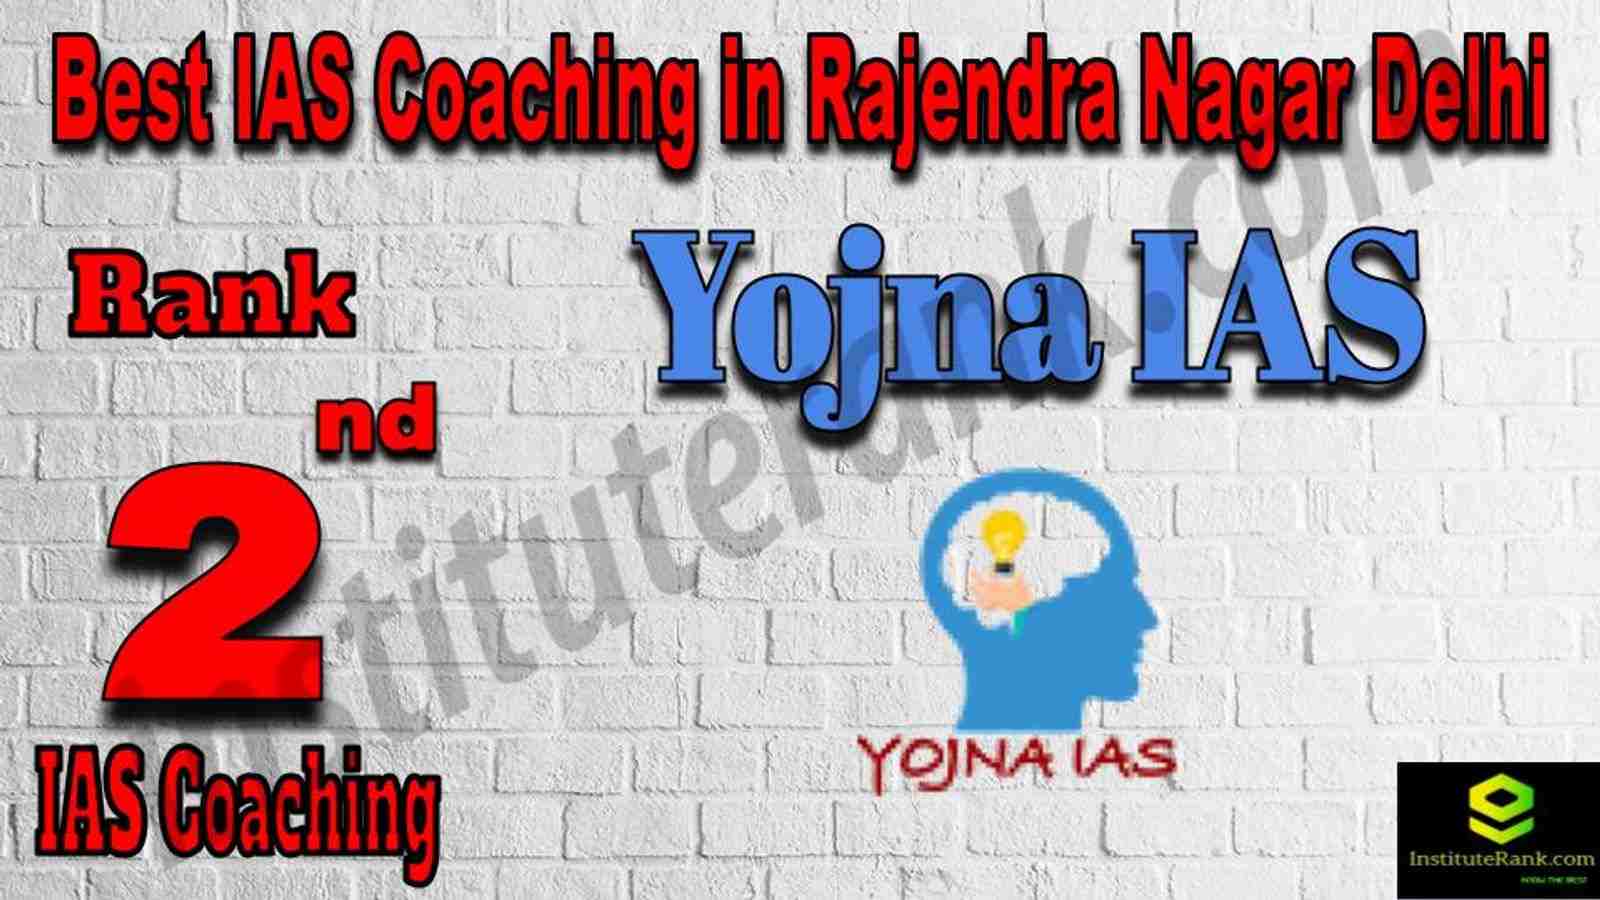 2nd Best IAS Coaching in Rajendra Nagar